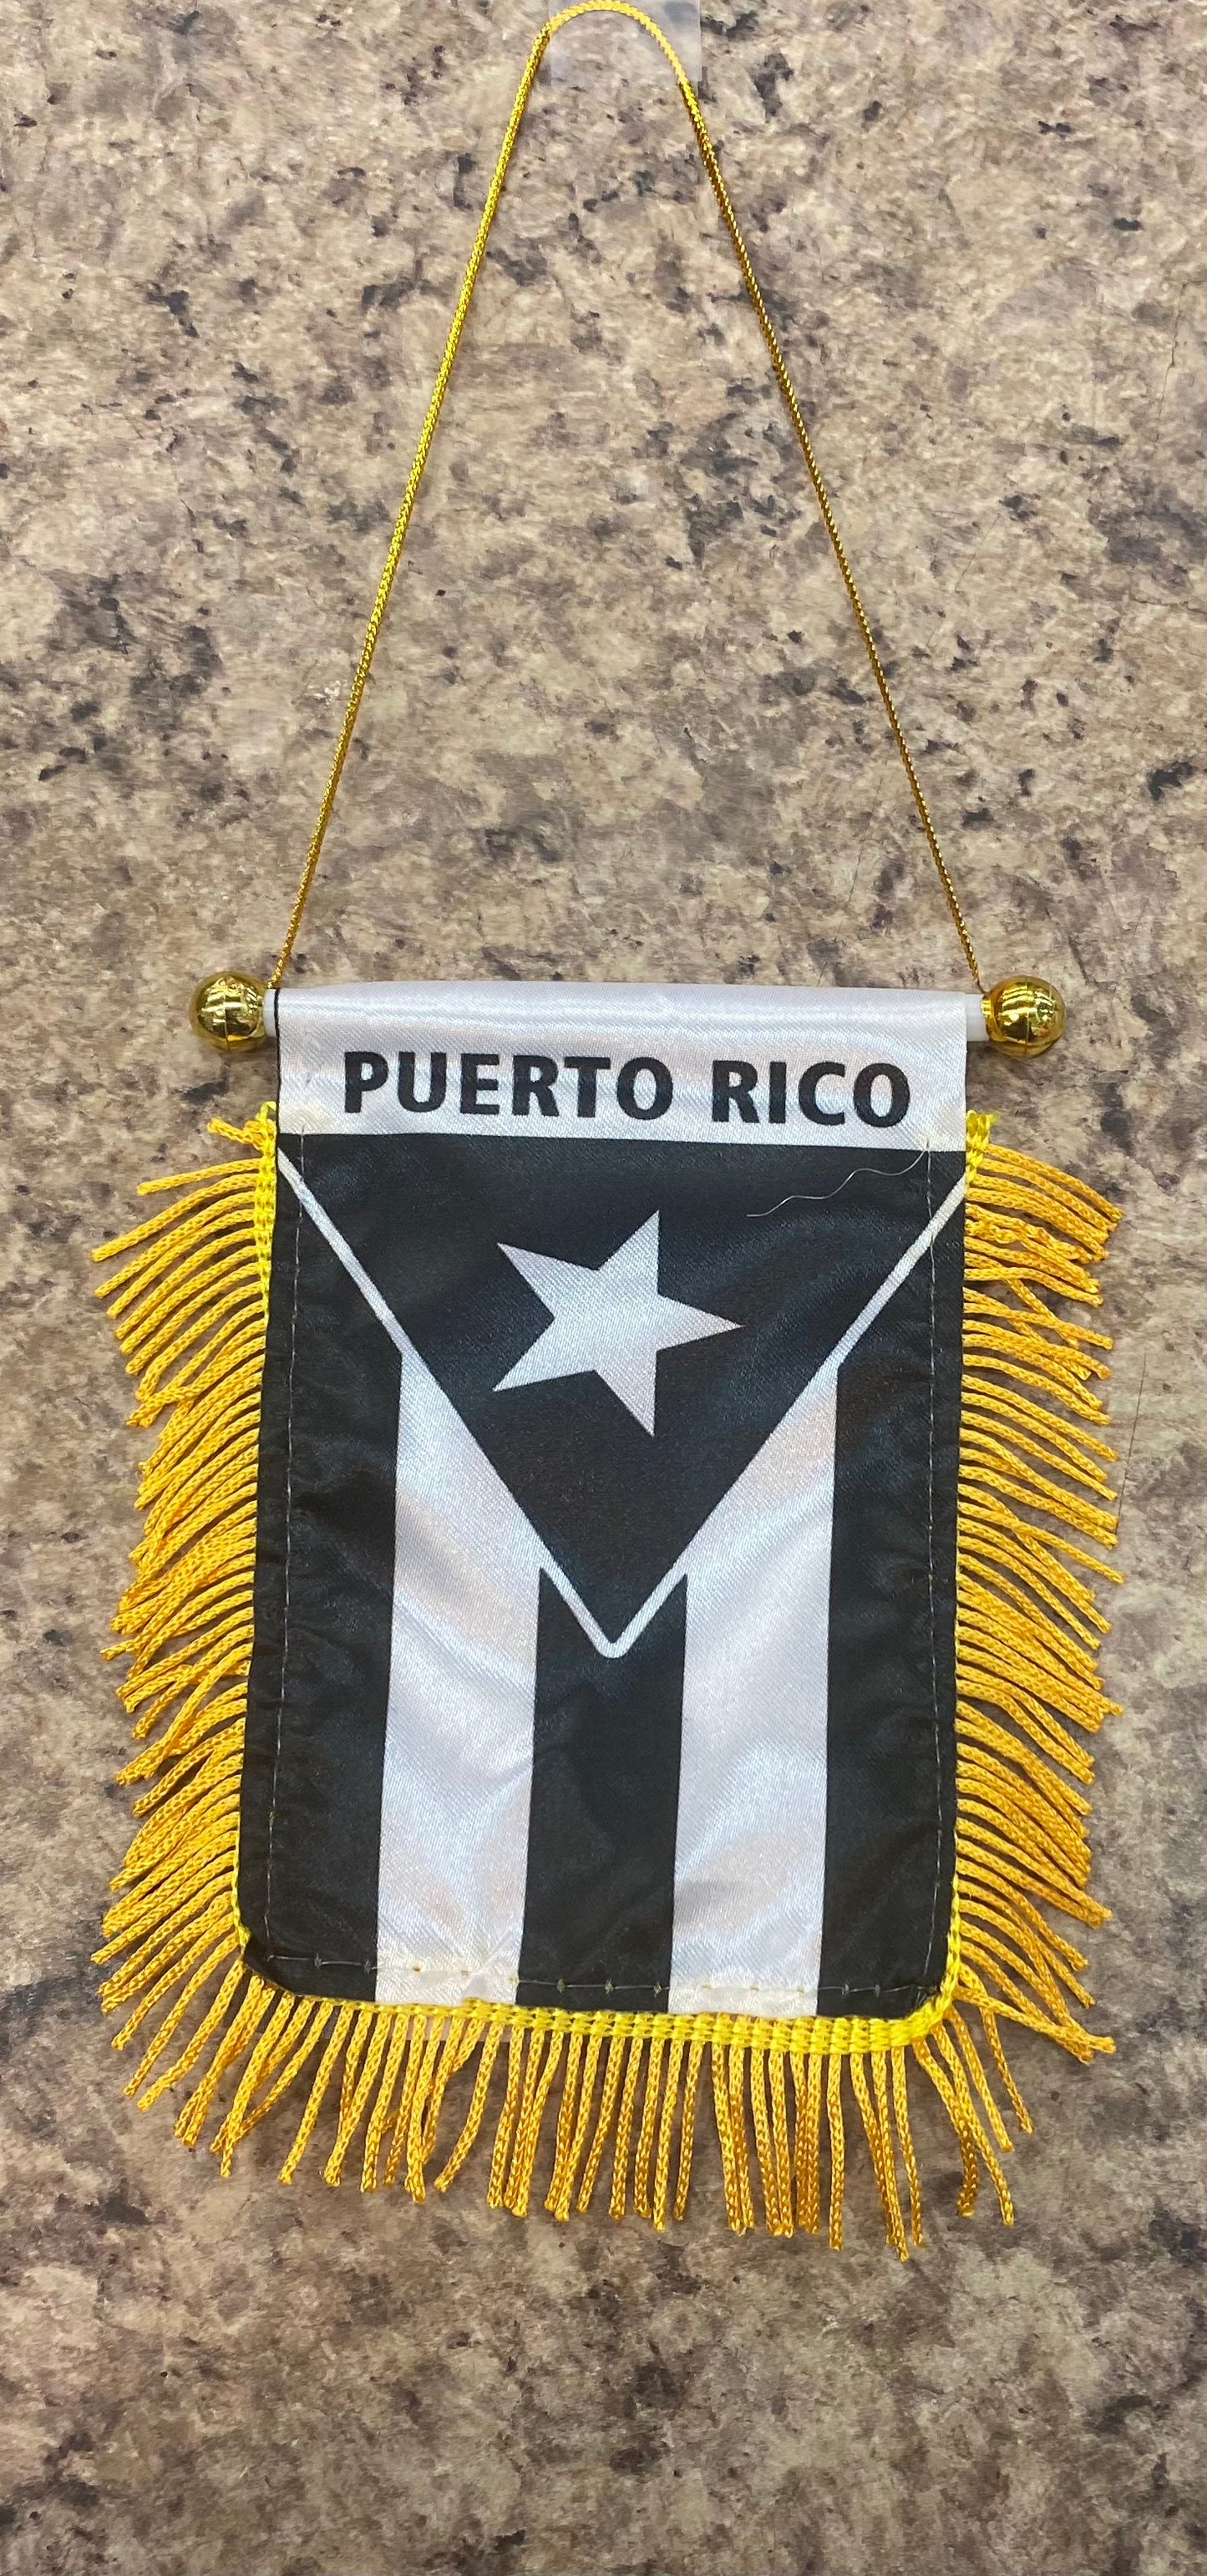 Puerto Rico mini flag